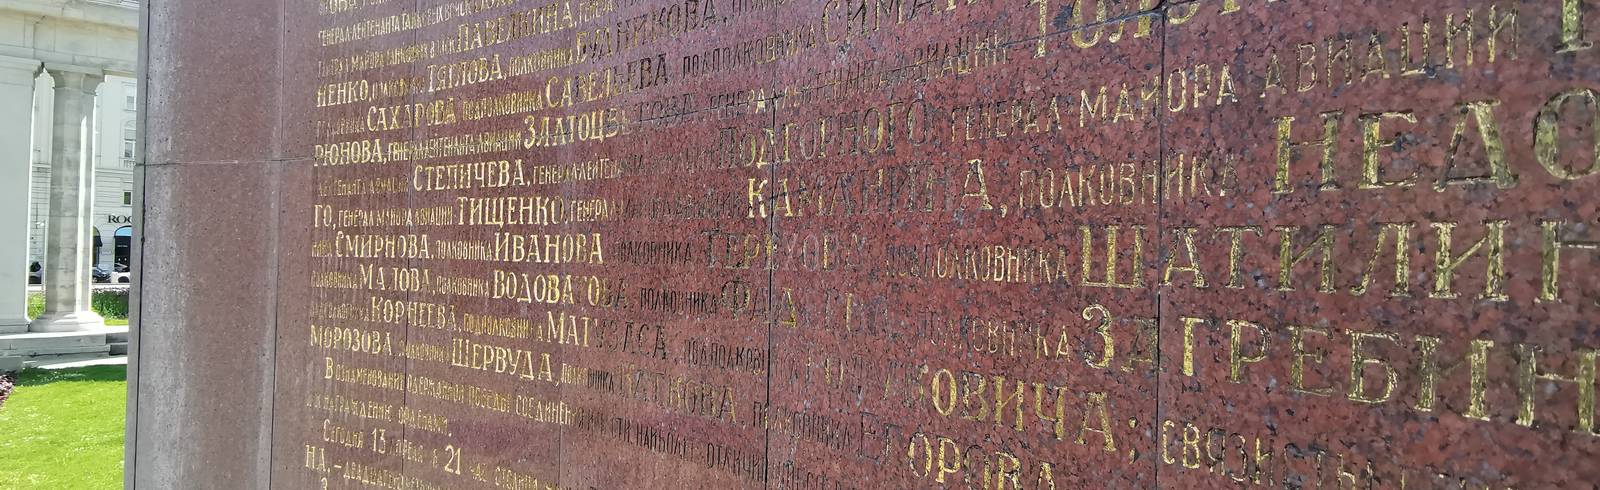 Erneute Farb-Attacke auf Russen-Denkmal